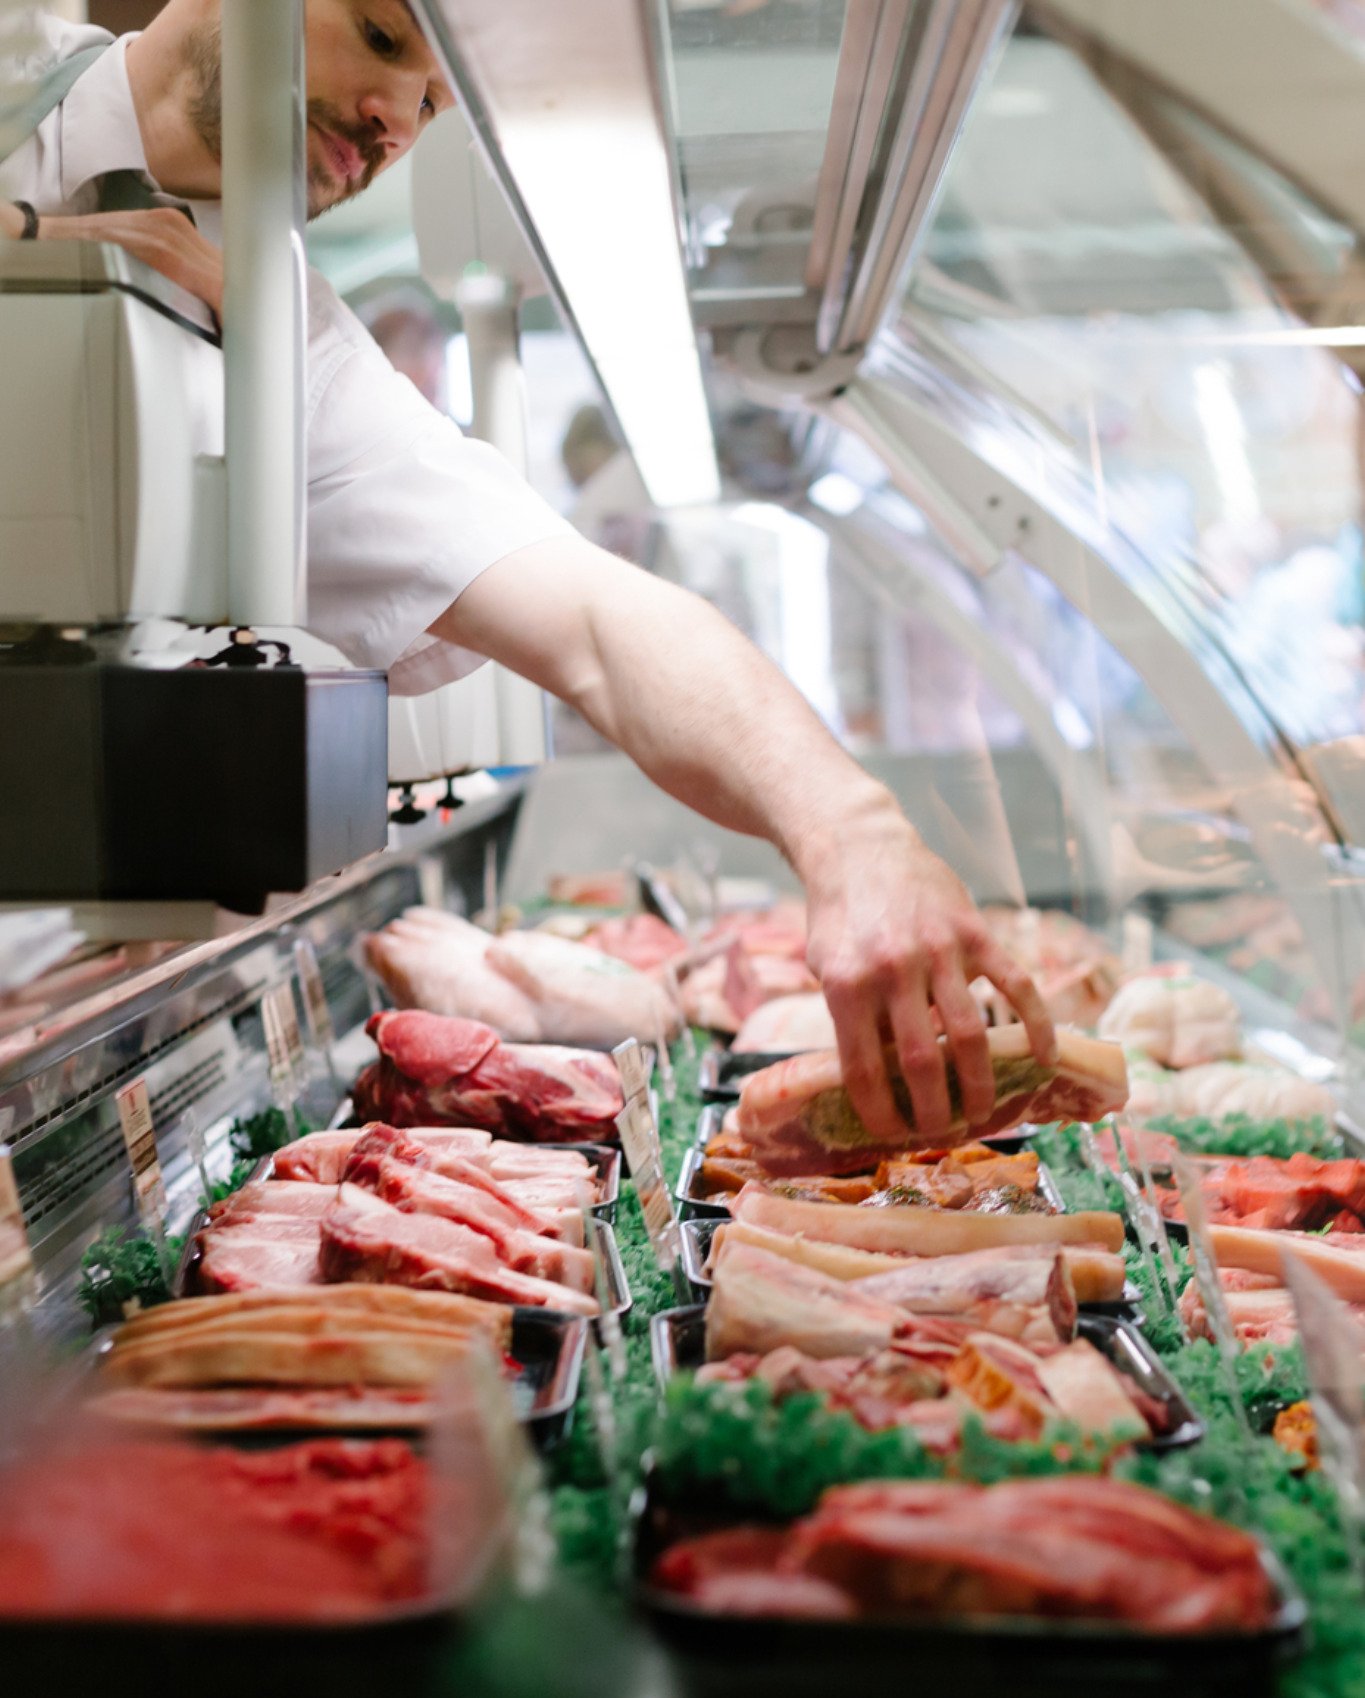 Retail customer handling quality Teys meat